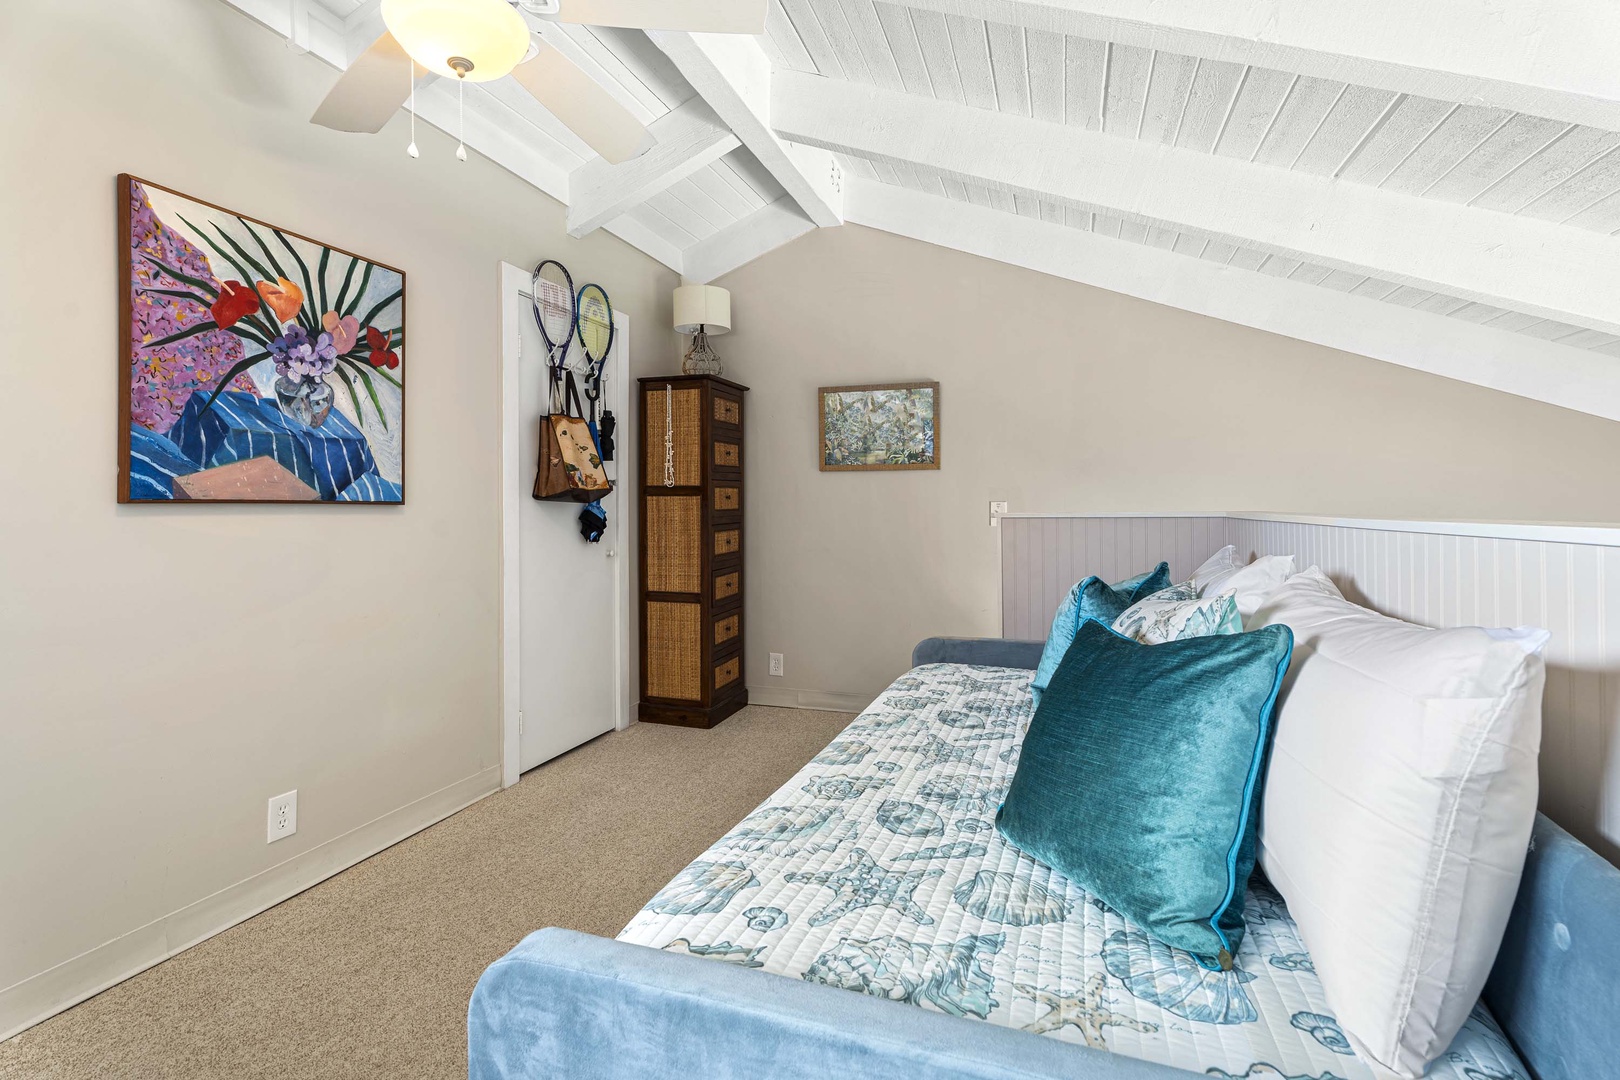 Kailua Kona Vacation Rentals, Kona Makai 6303 - Island decor adorns the classic loft bedroom